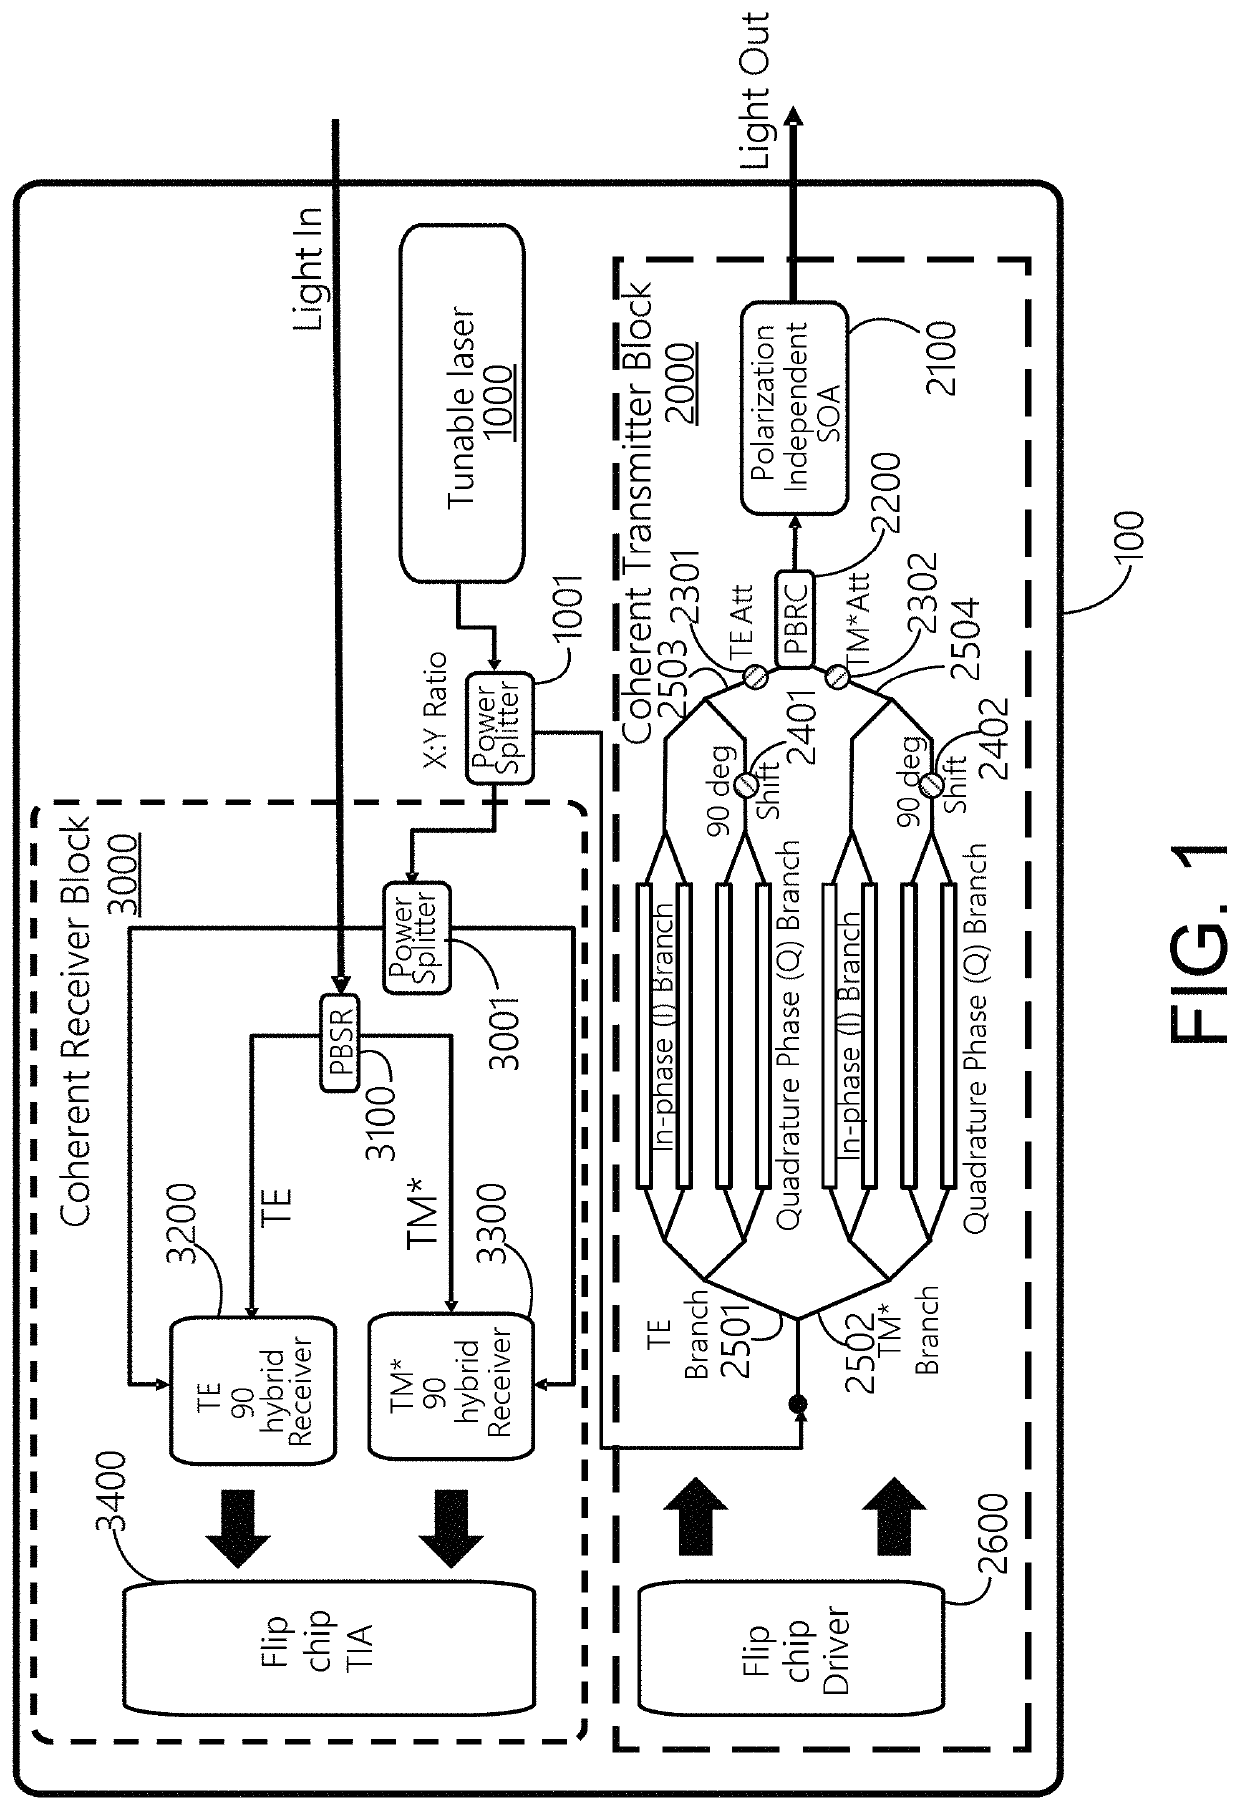 Integrated coherent optical transceiver, light engine